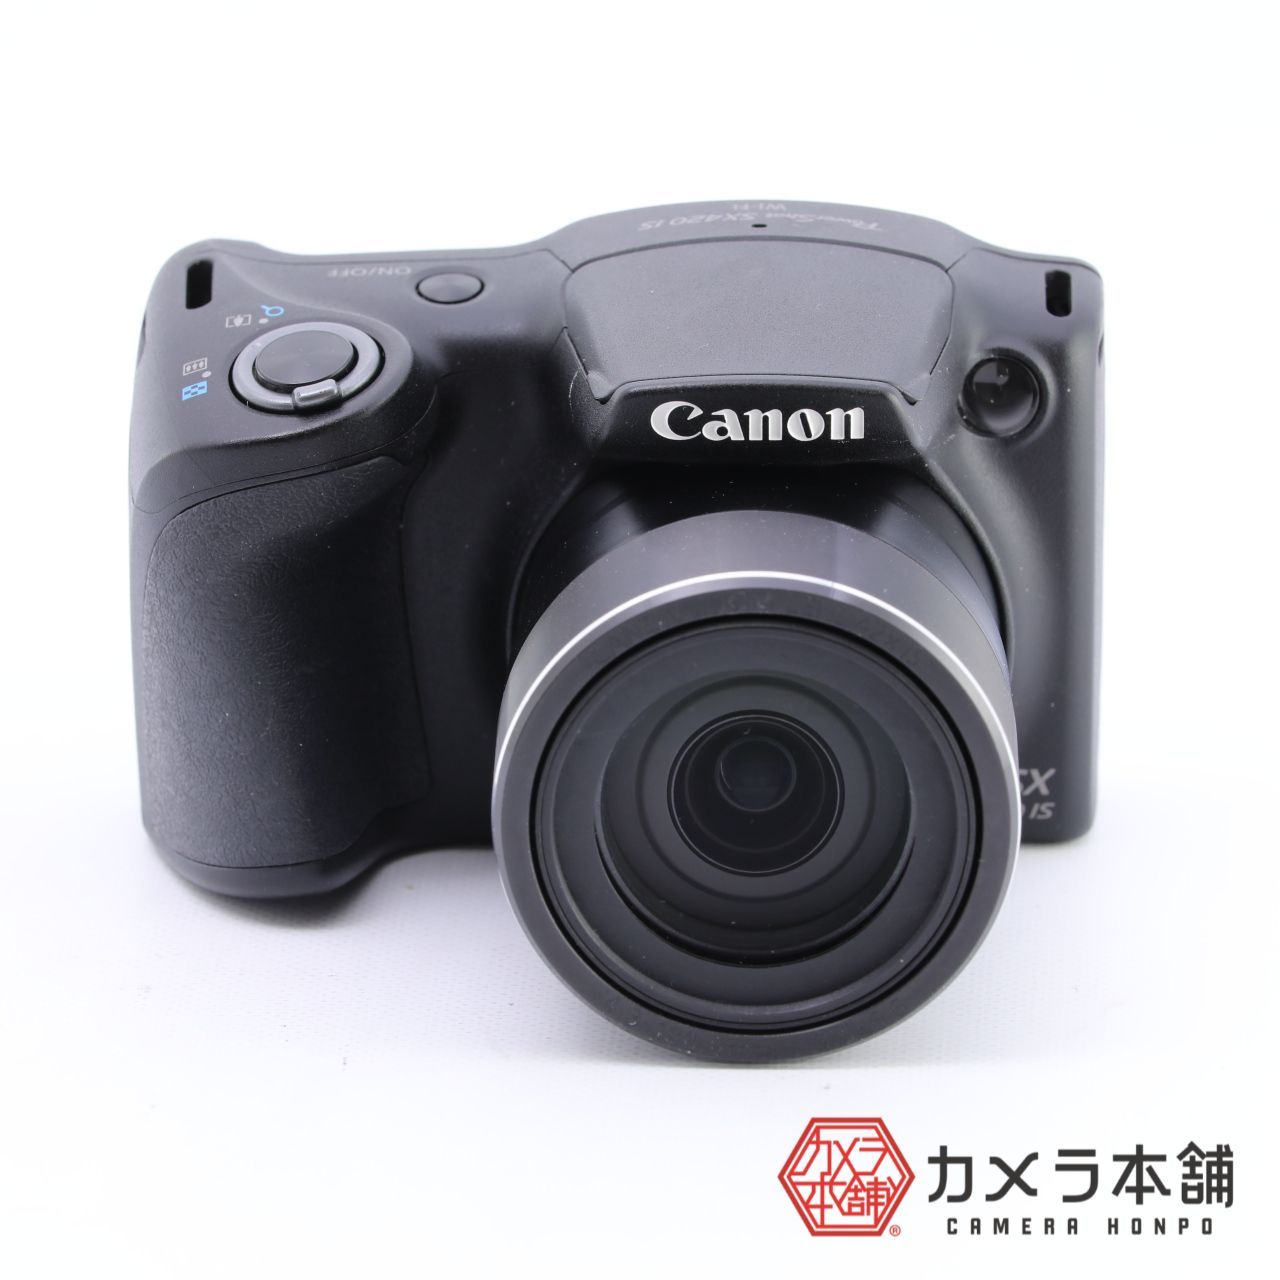 Canon キヤノン PowerShot SX420 IS 光学42倍ズーム カメラ本舗｜Camera honpo メルカリ